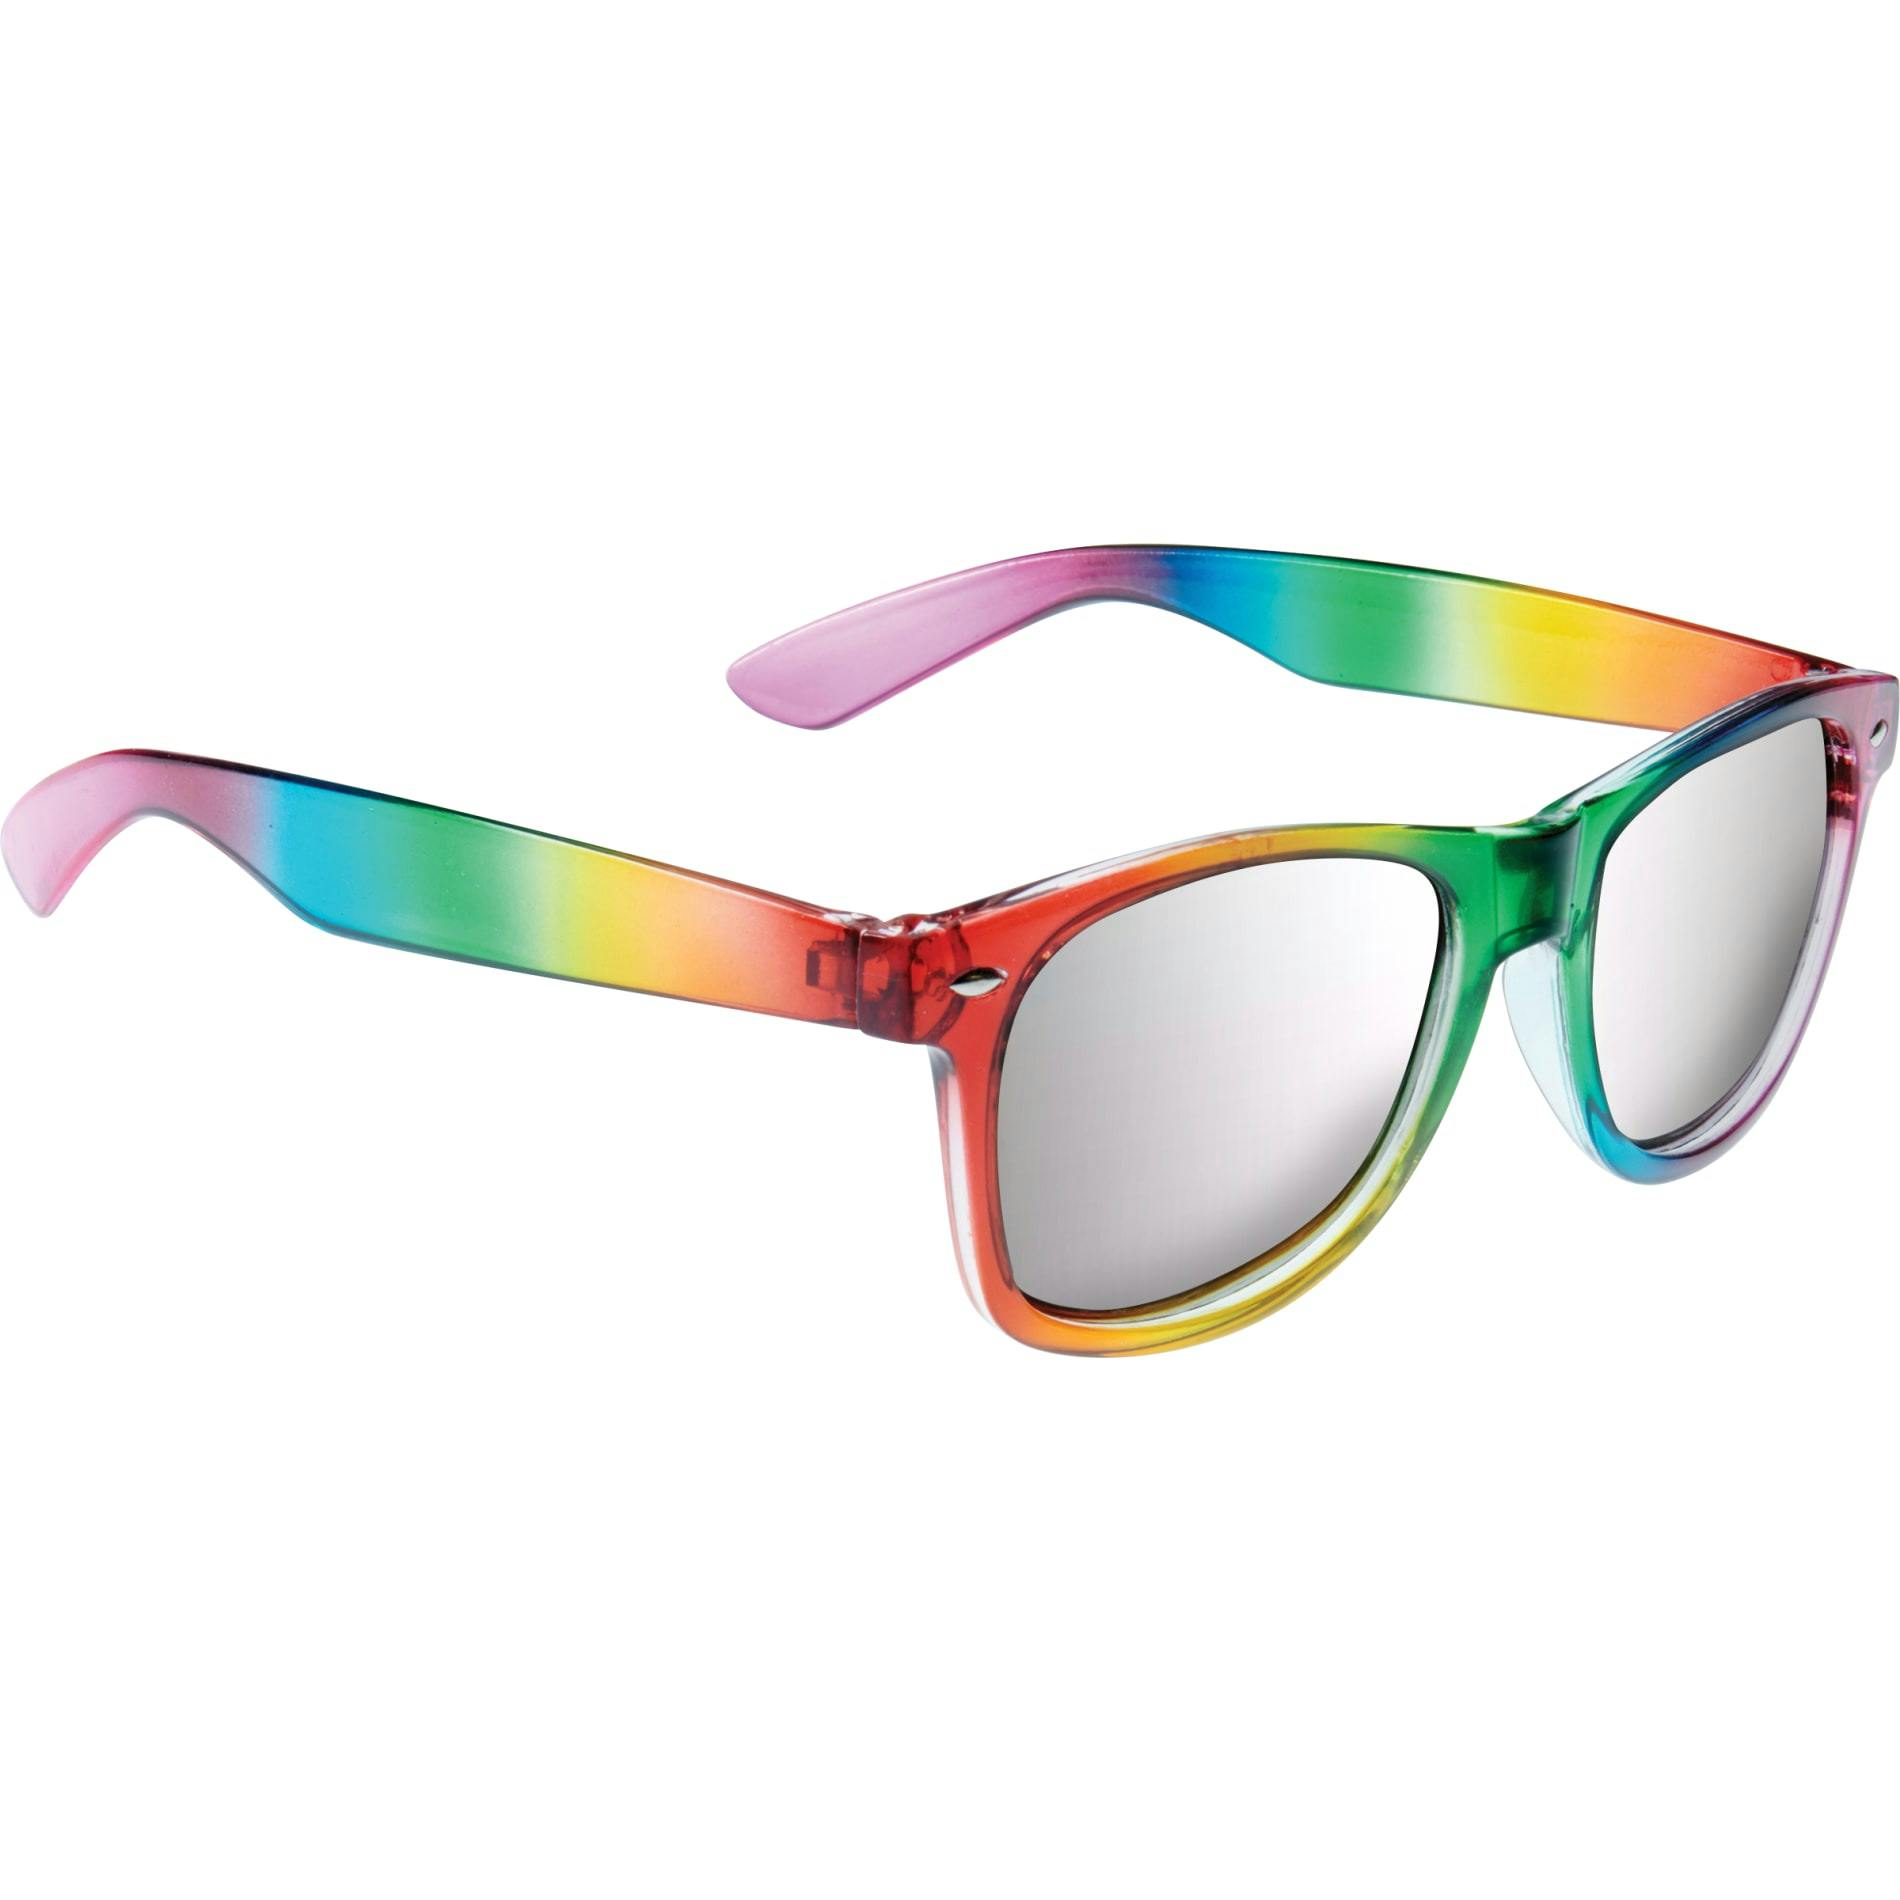 Rainbow Sun Ray Sunglasses - additional Image 1